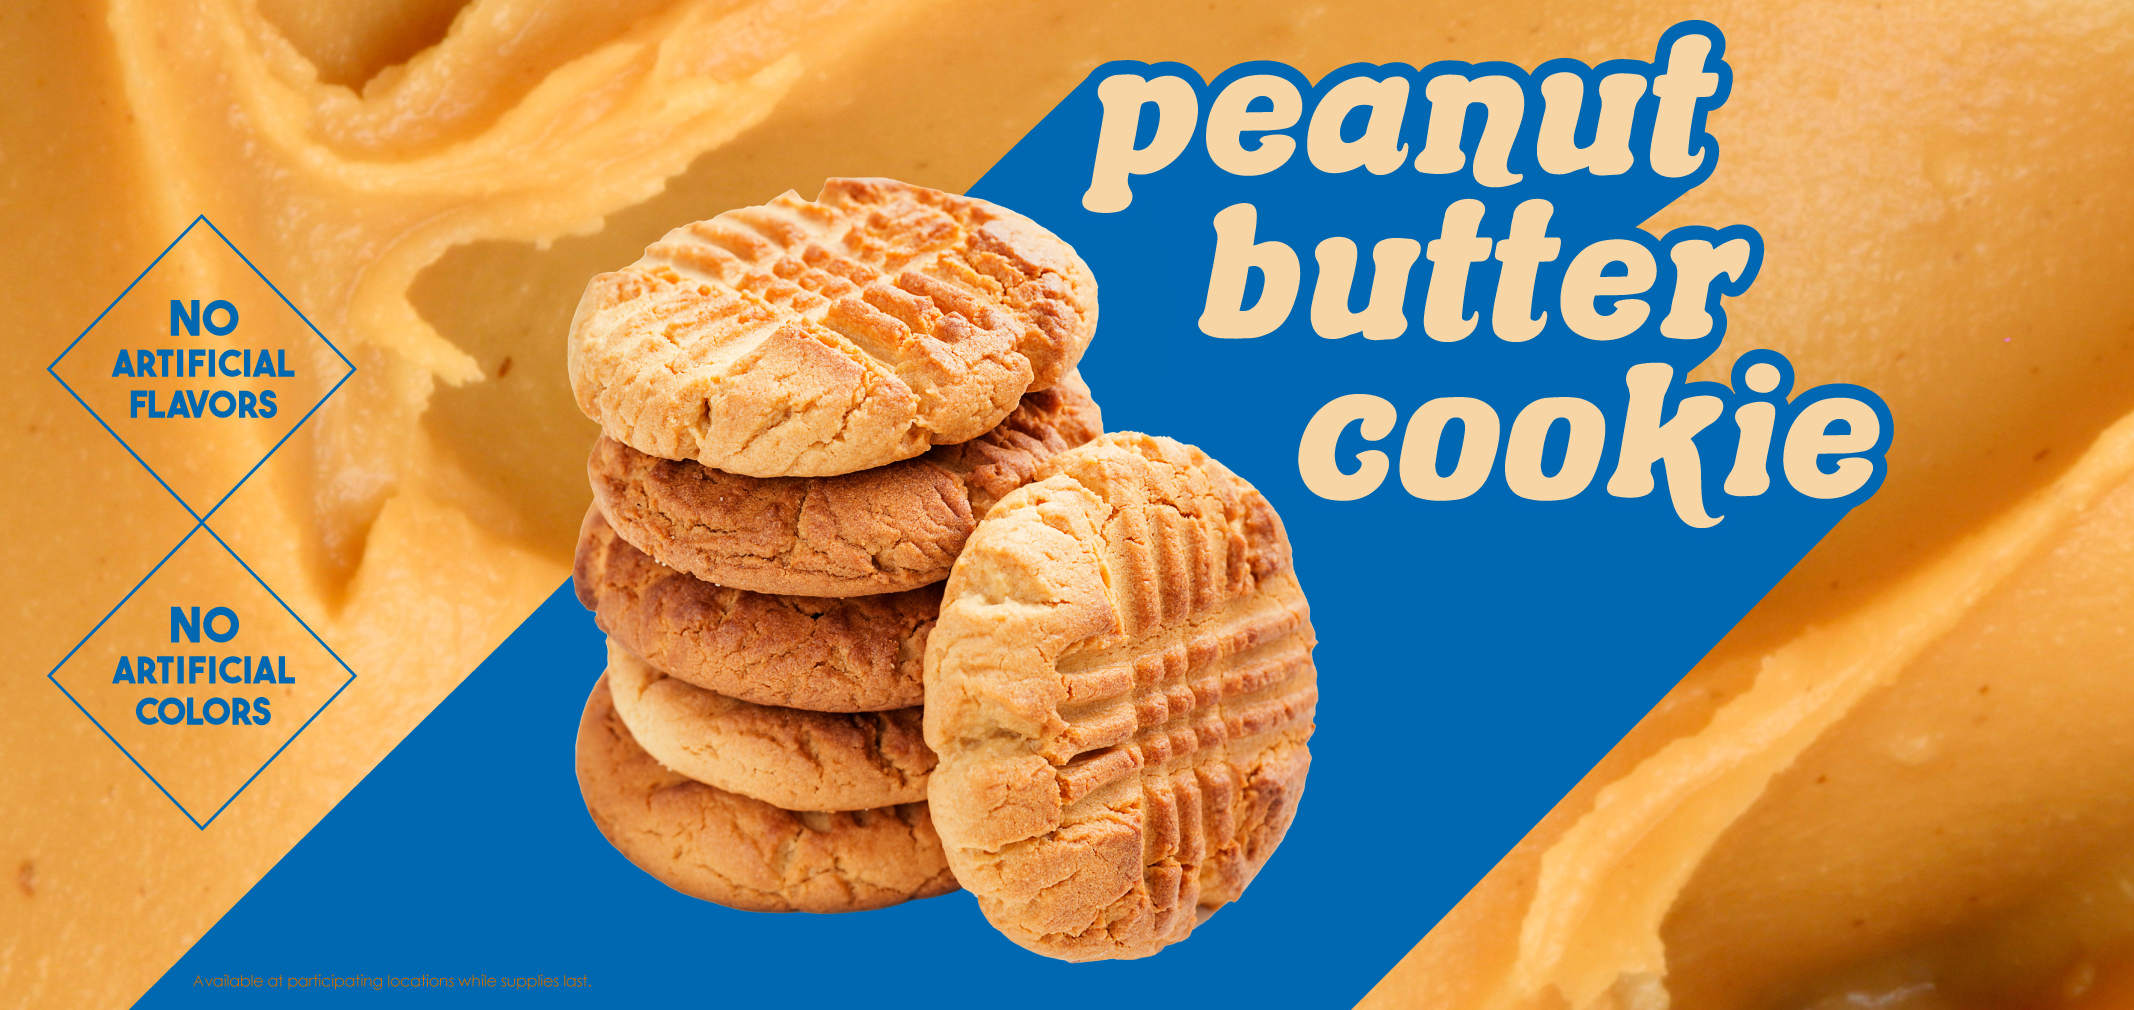 Peanut Butter Cookie label image